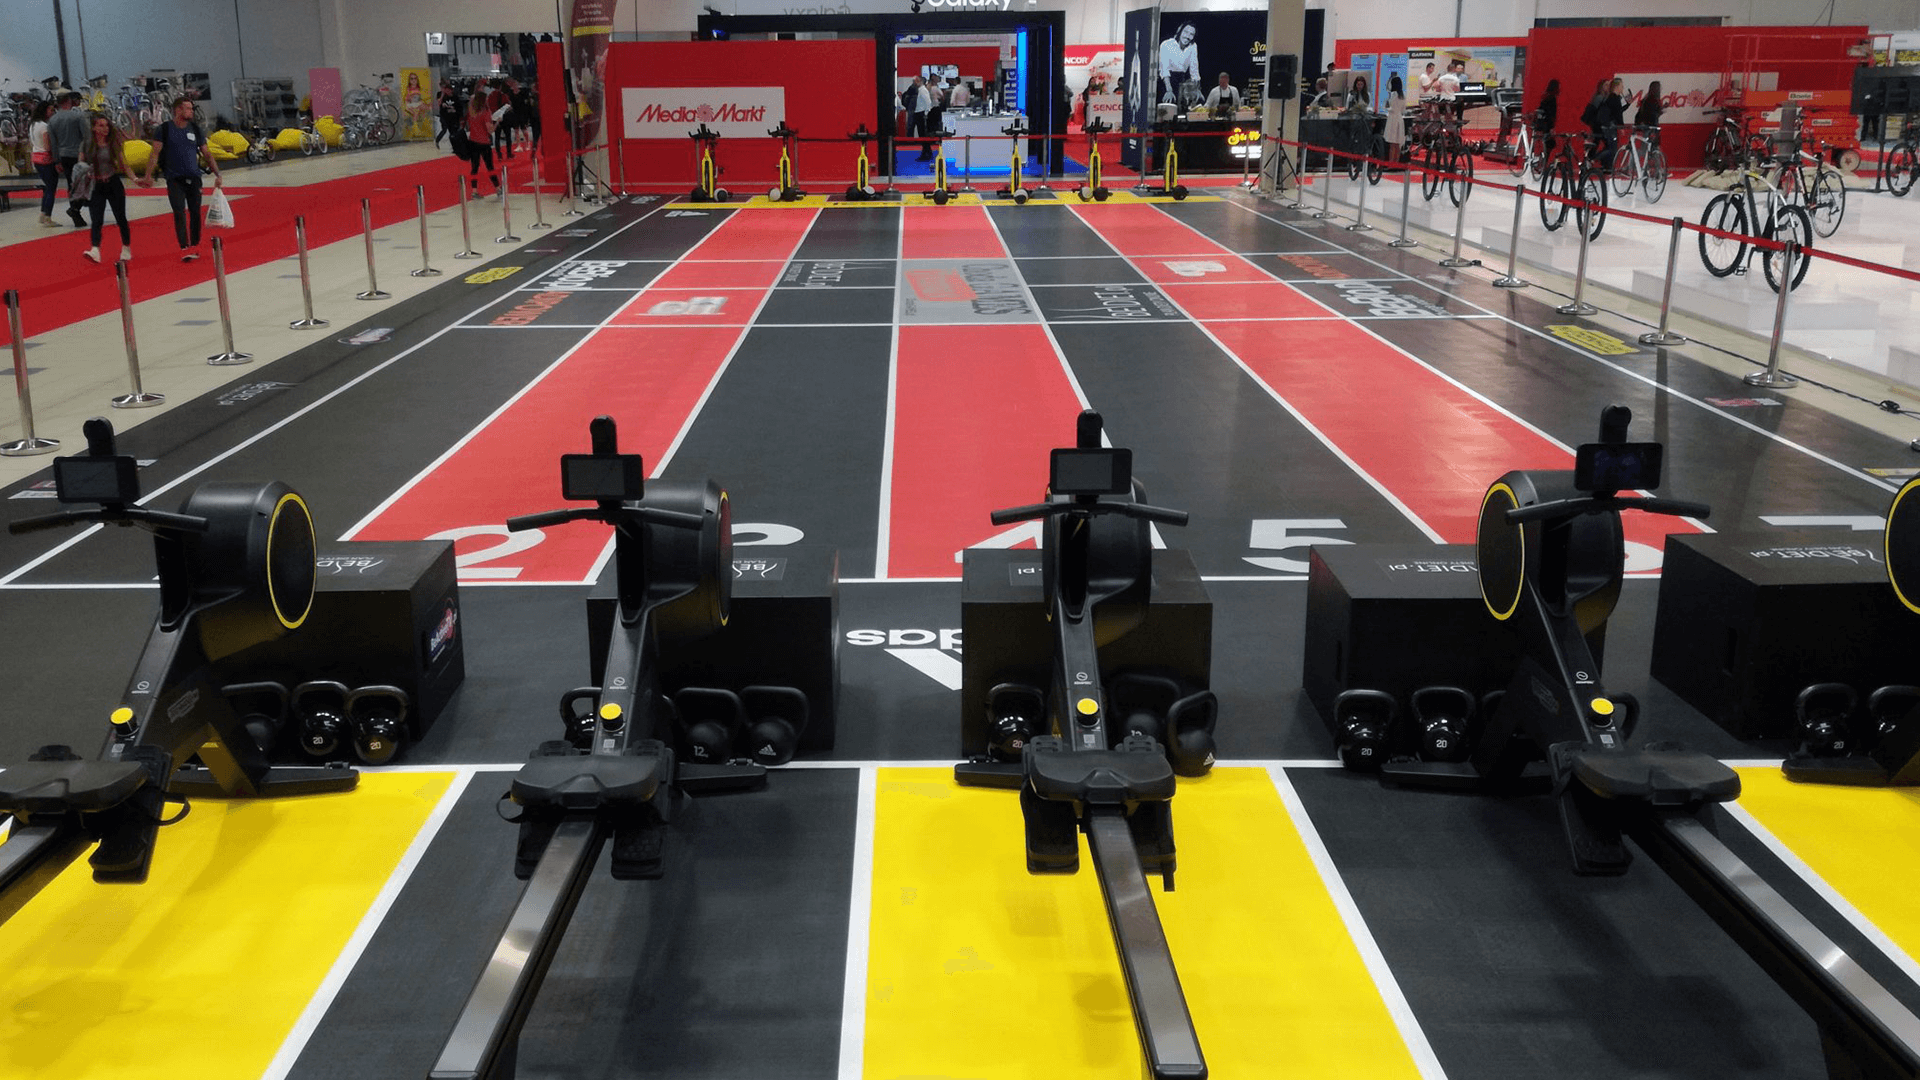 gym floorig UAE